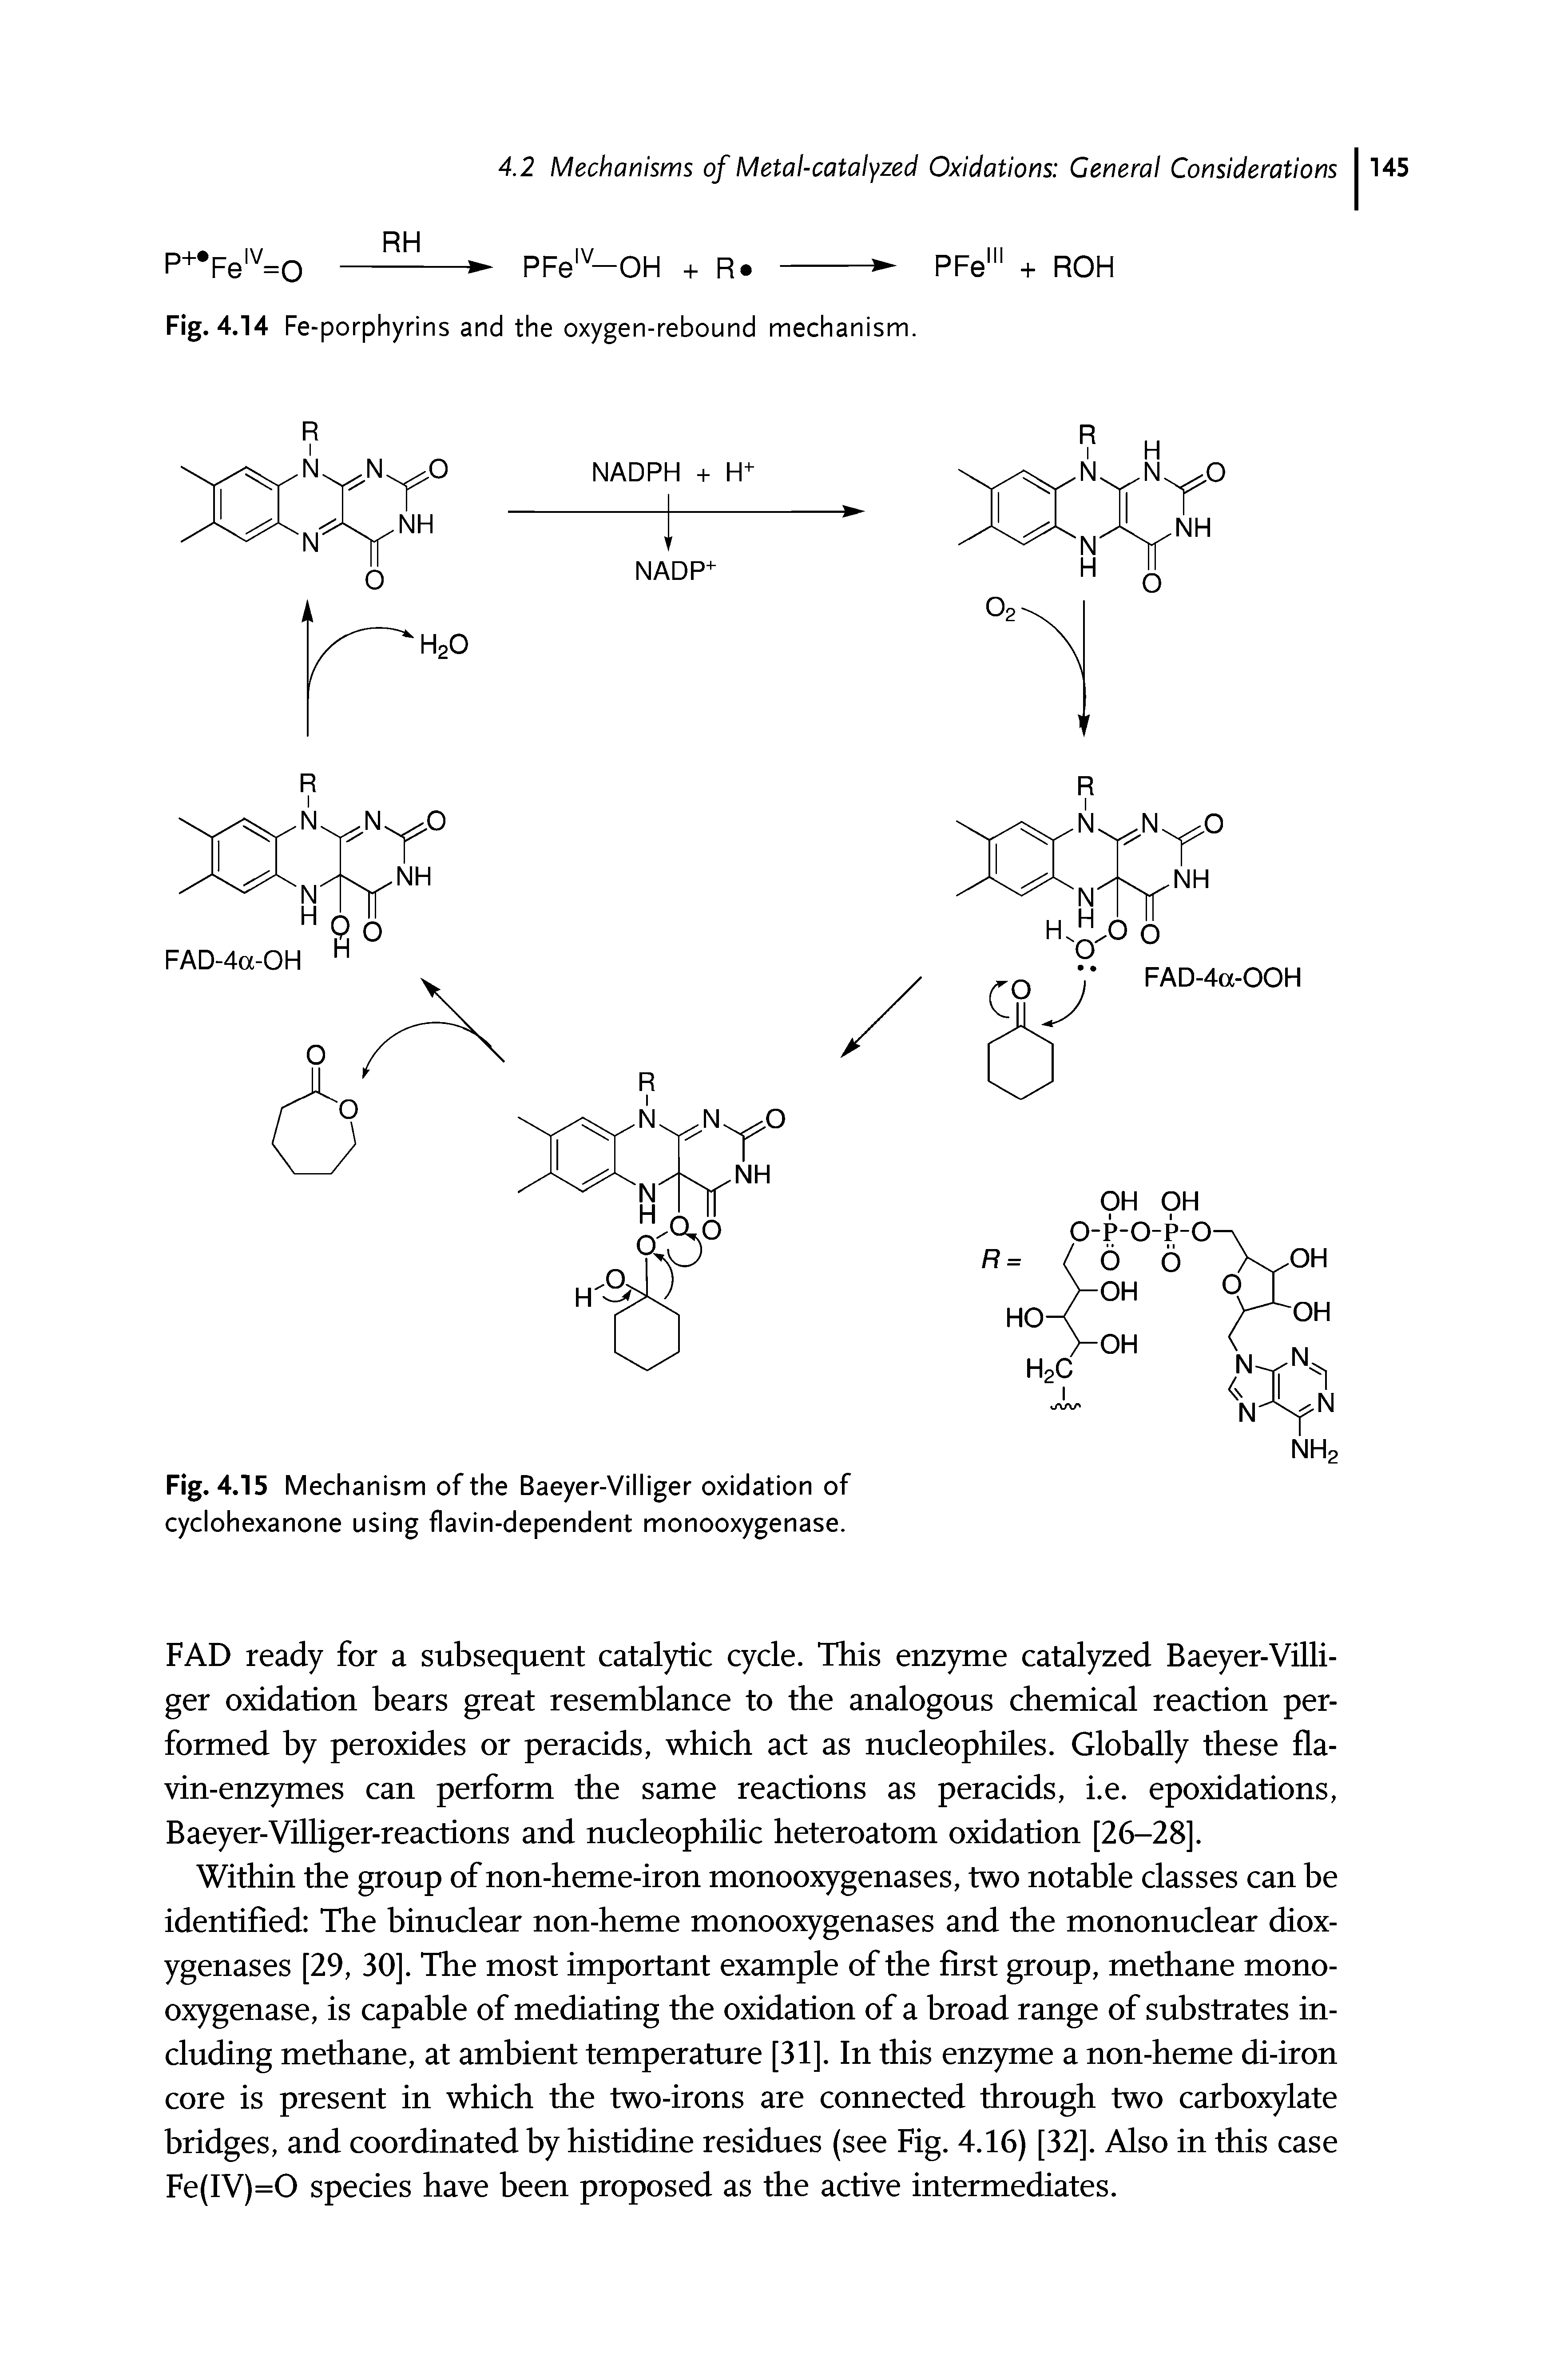 Fig. 4.15 Mechanism of the Baeyer-Villiger oxidation of cyclohexanone using flavin-dependent monooxygenase.